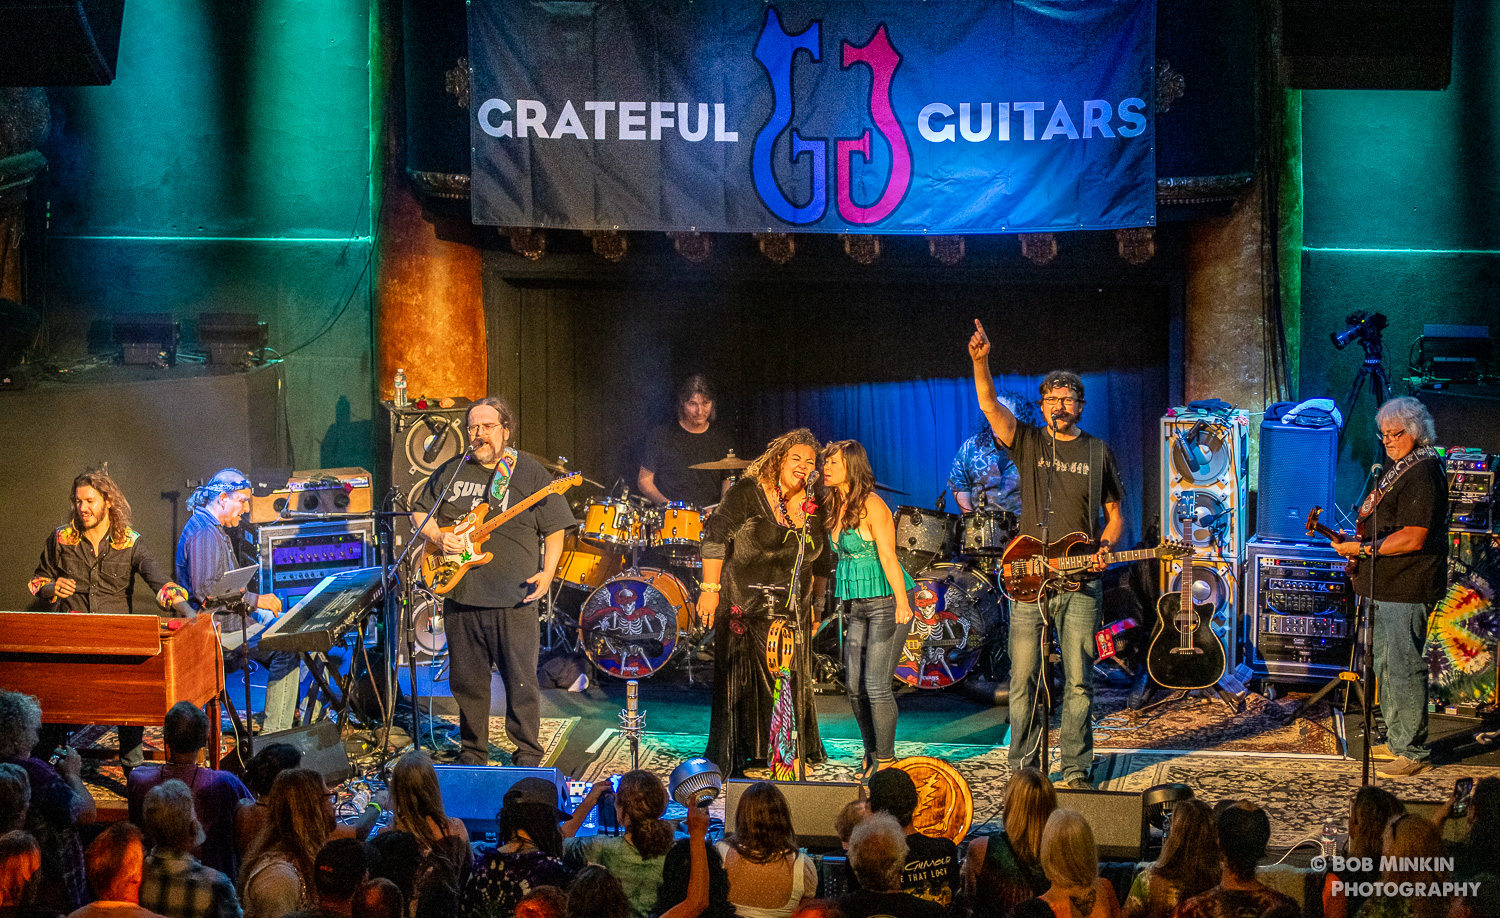 Grateful Guitar Foundation show - photo by Bob Minkin